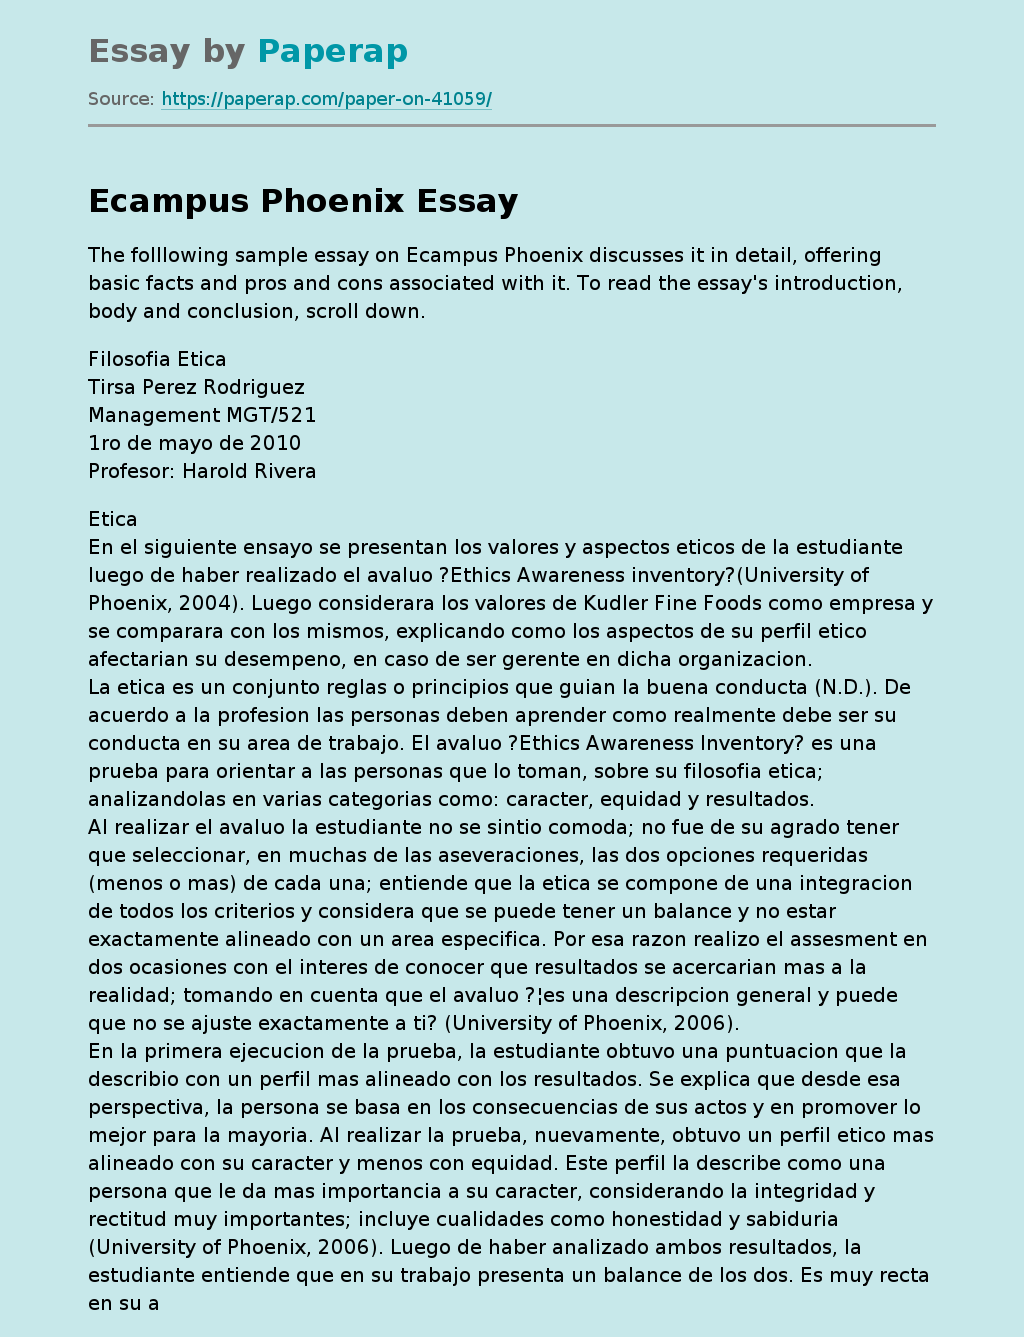 Sample Essay on Ecampus Phoenixv